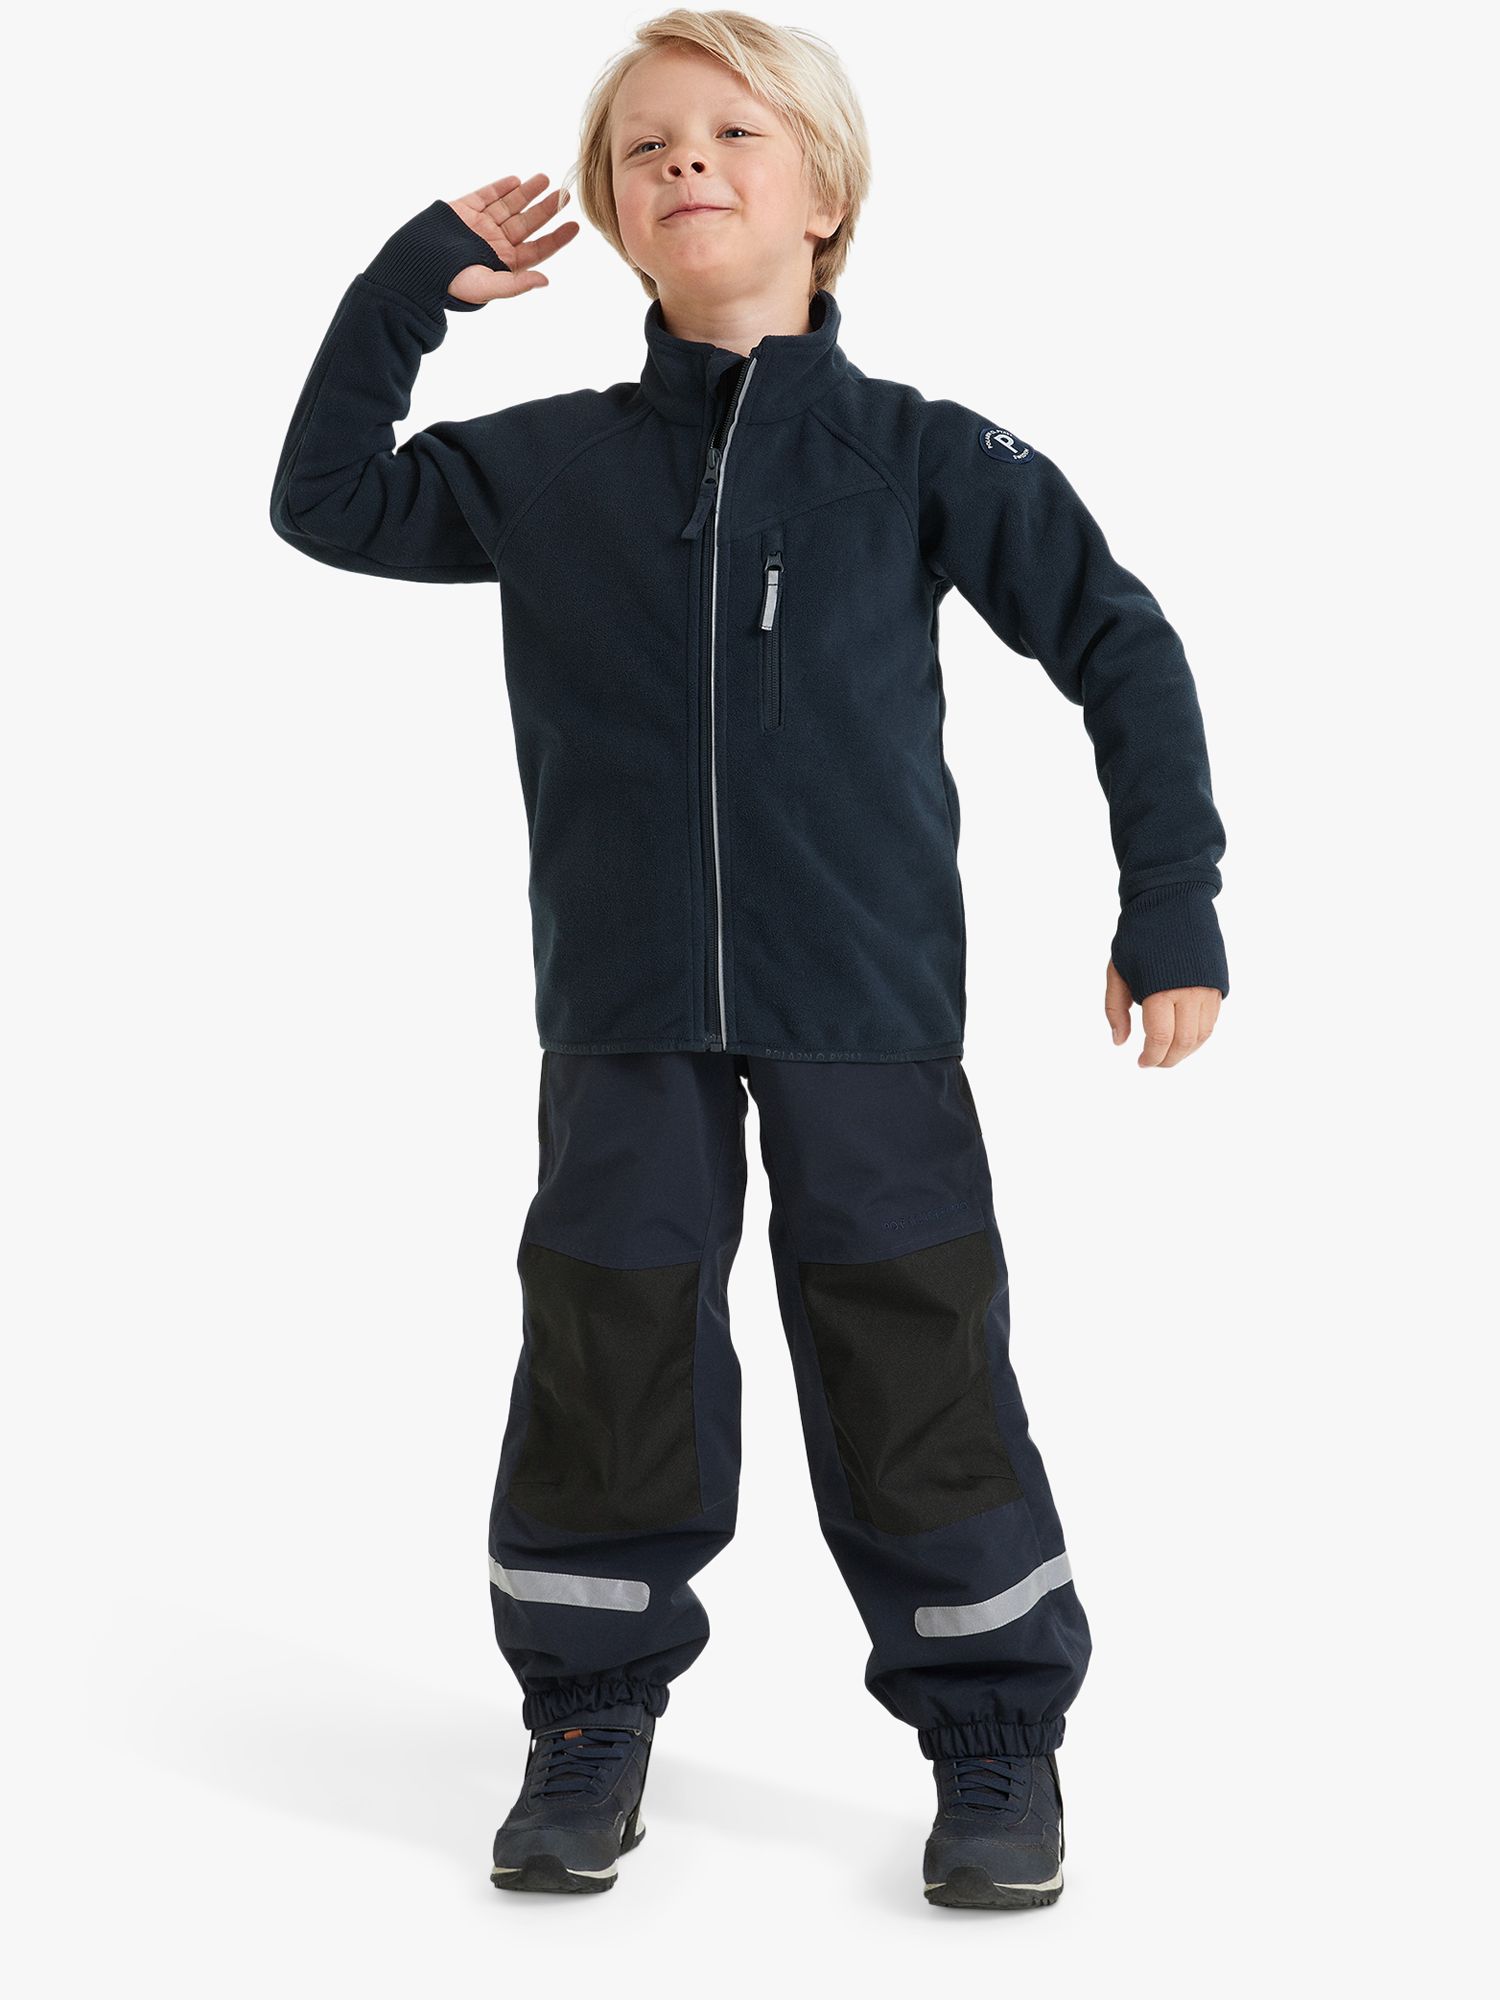 Polarn O. Pyret Kids' Fleece Jacket, Navy, 2-3 years